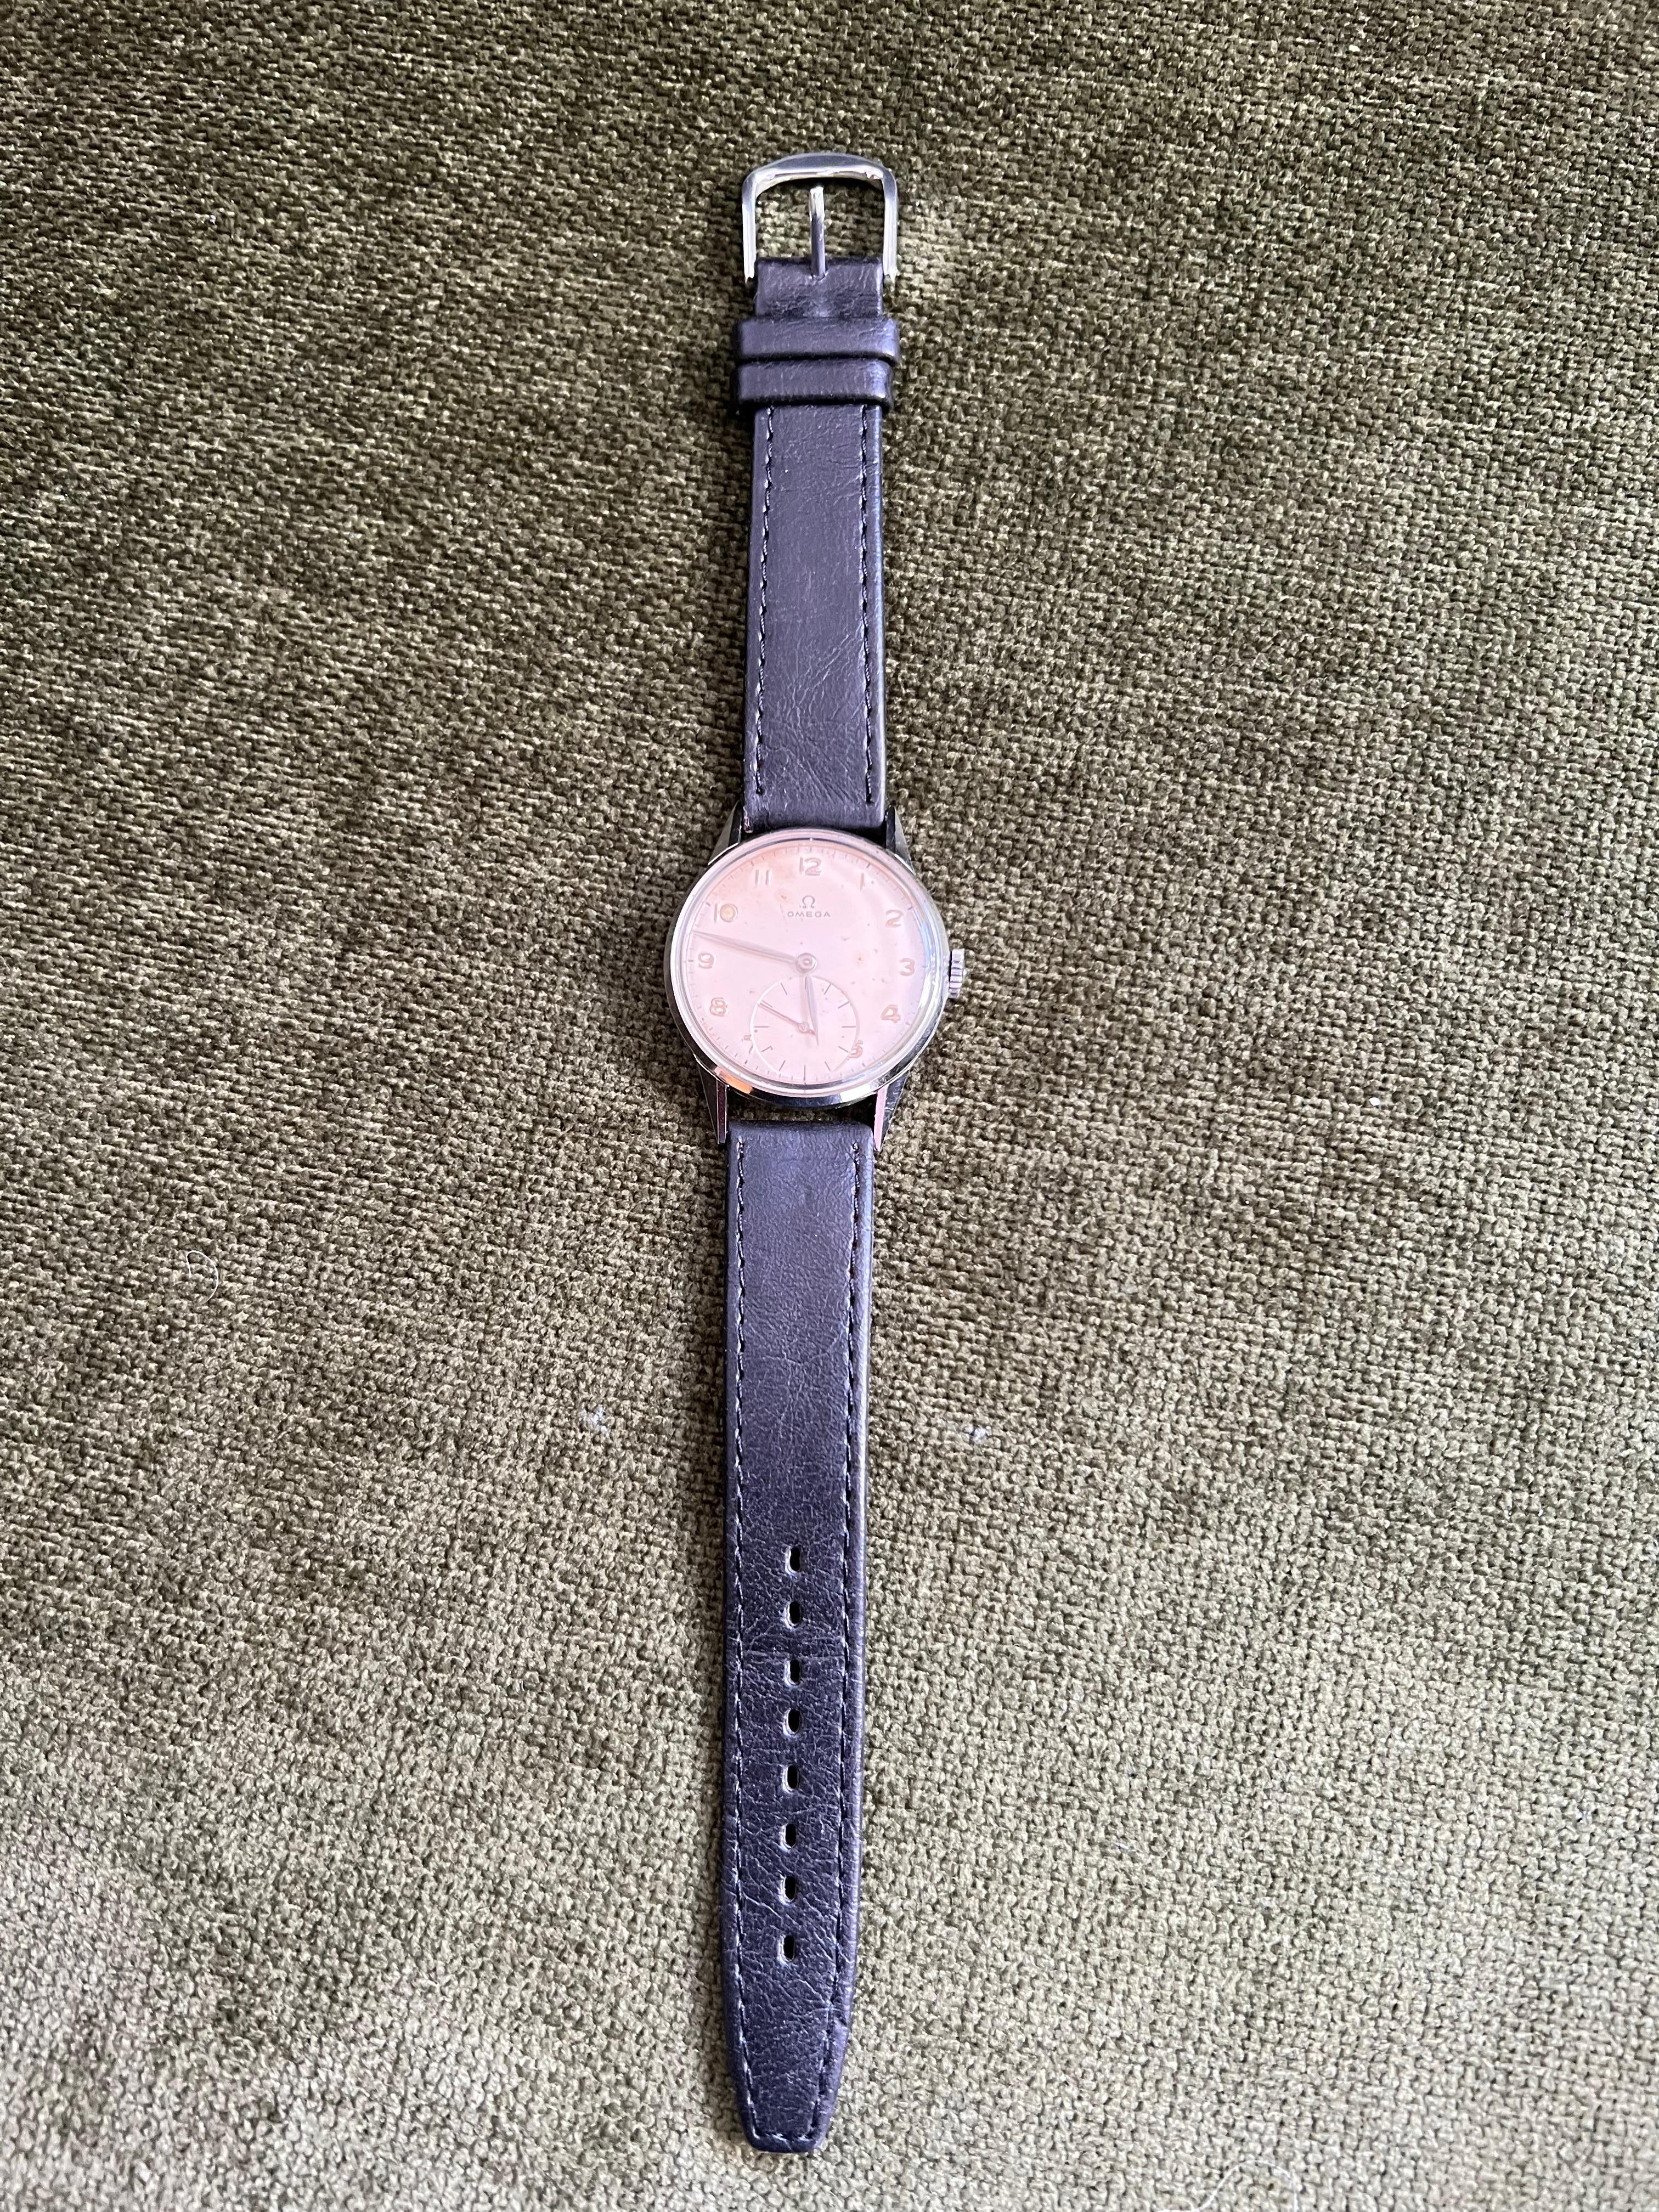 Seltene Vintage 1944 Omega Chronometer-Uhr, US Navy, ausgestellt im Angebot 1